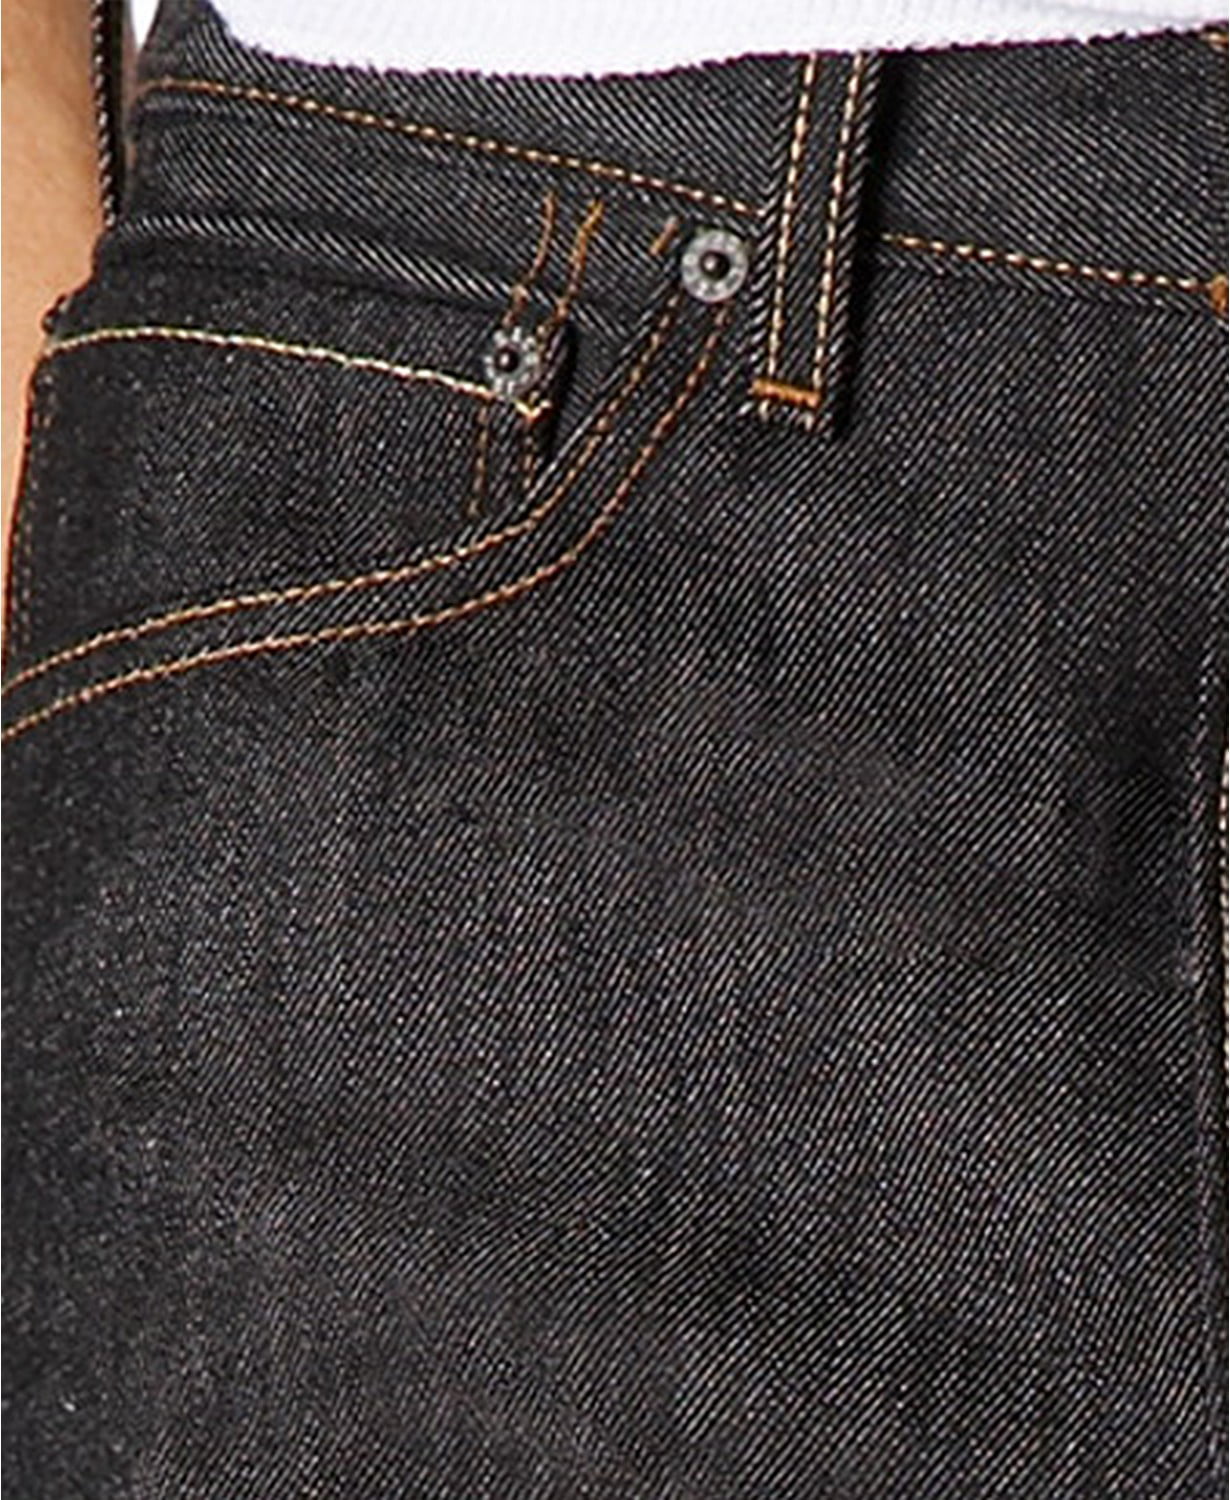 Levi's Men's Big & Tall BLACK RIGID 501 Original Shrink-to-Fit Jeans 40x38  